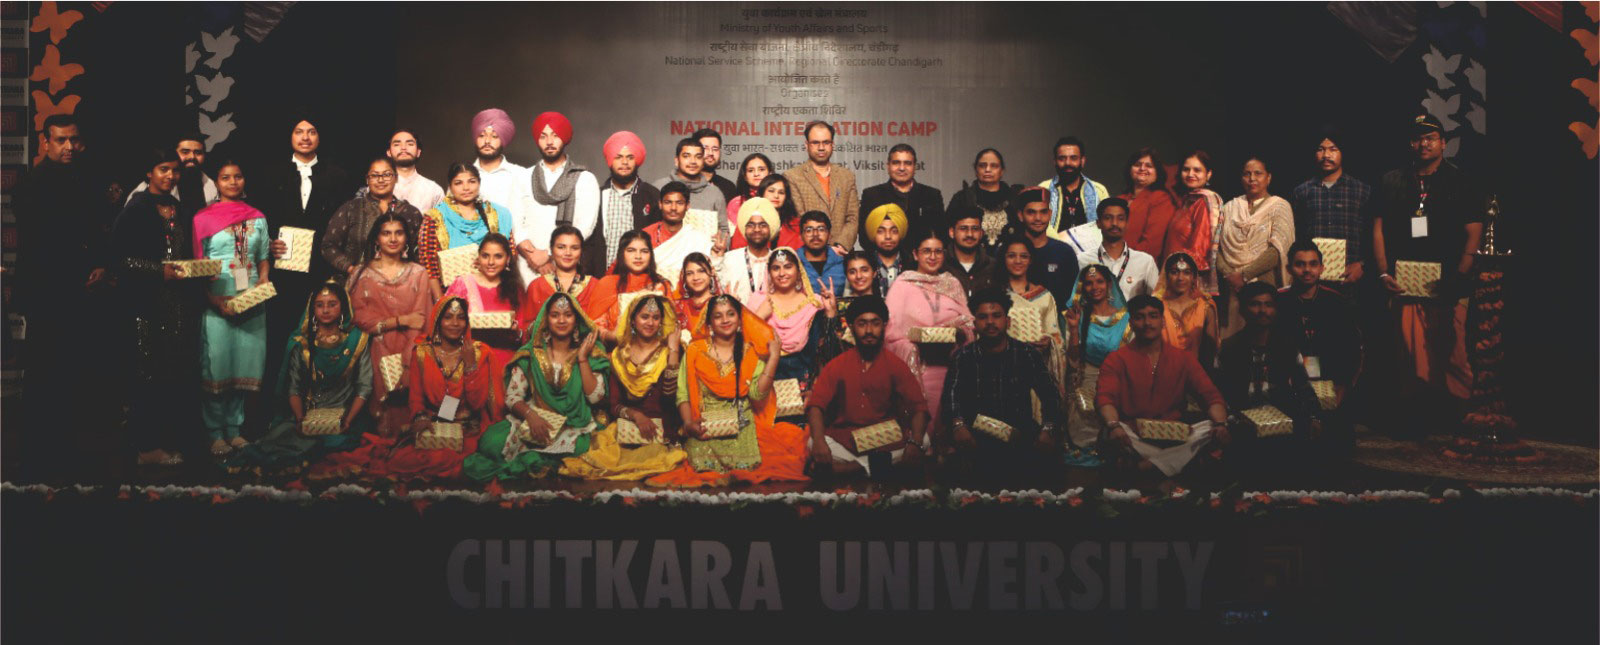 7-Day National Integration Camp - Chitkara University